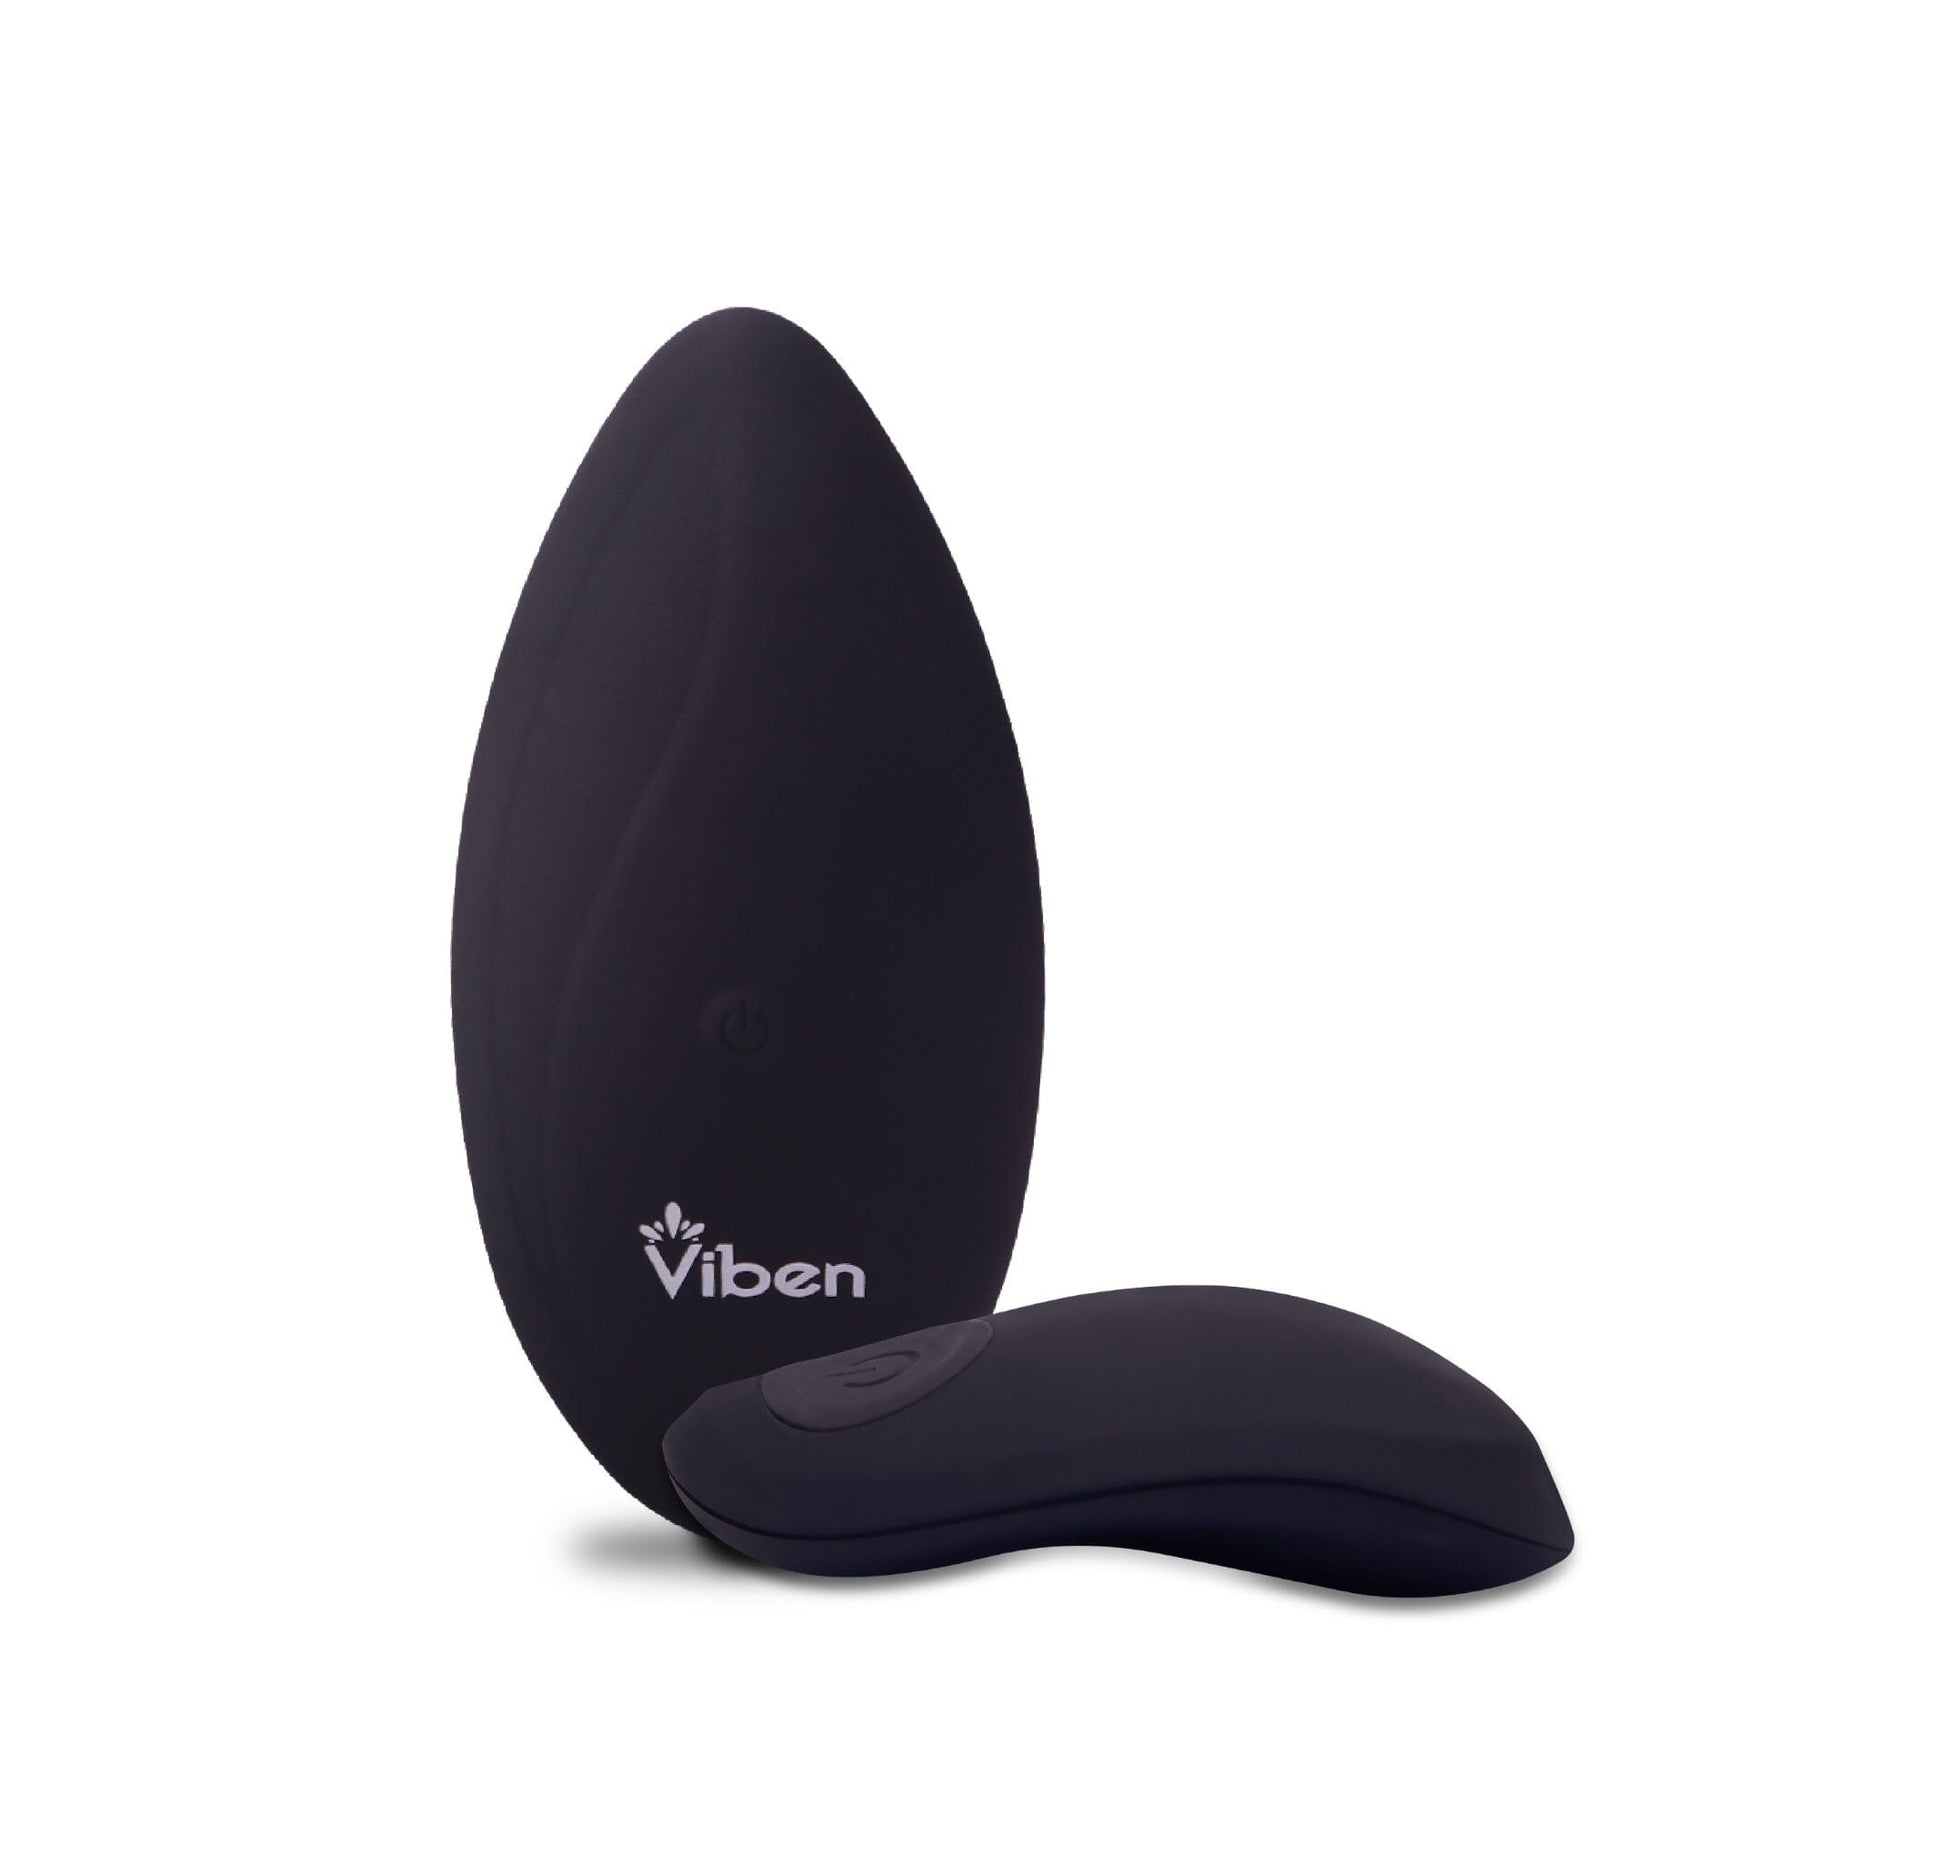 Racy Remote Control 10 Function Panty Vibe - Black Vibe Viben 